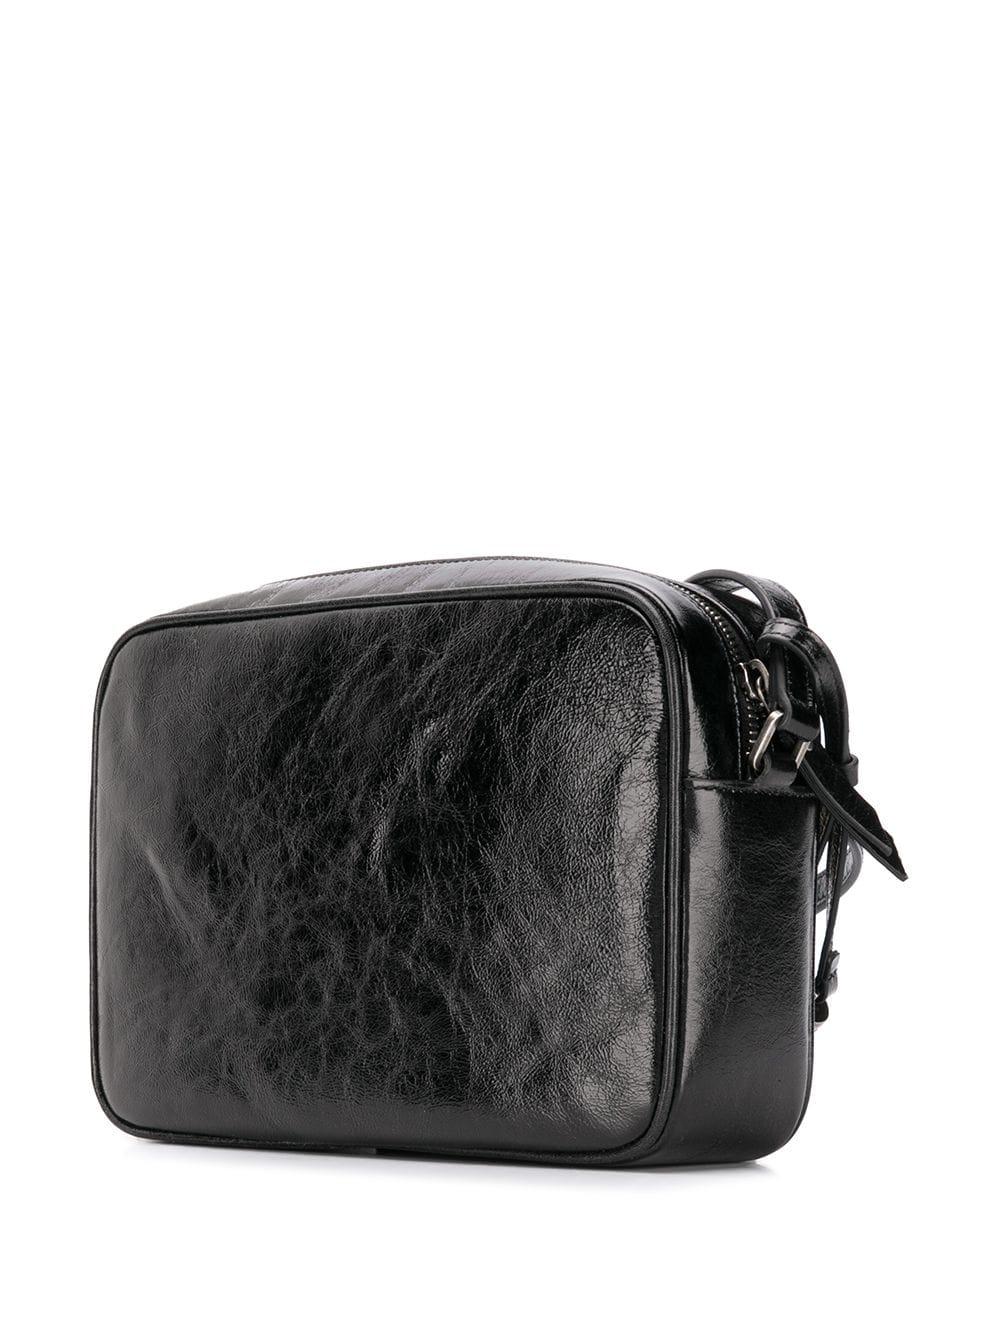 Saint Laurent Leather Lou Camera Bag in Black - Lyst